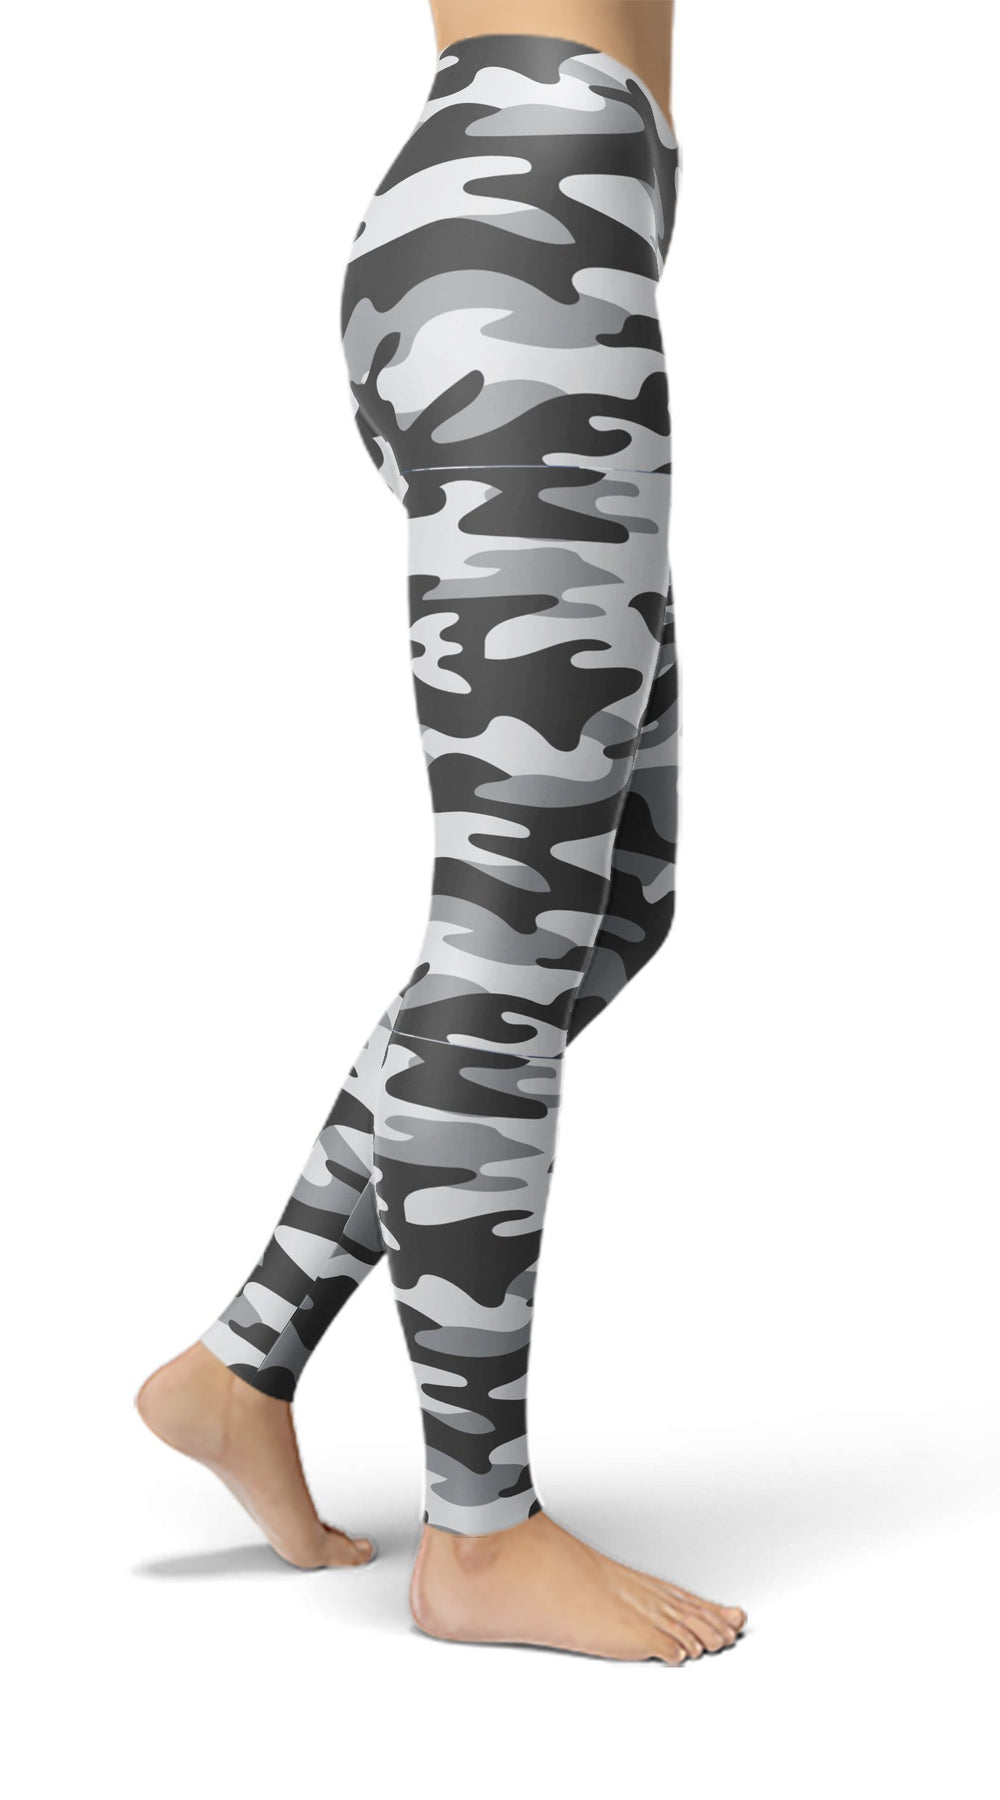 jean dark grey camouflage leggings